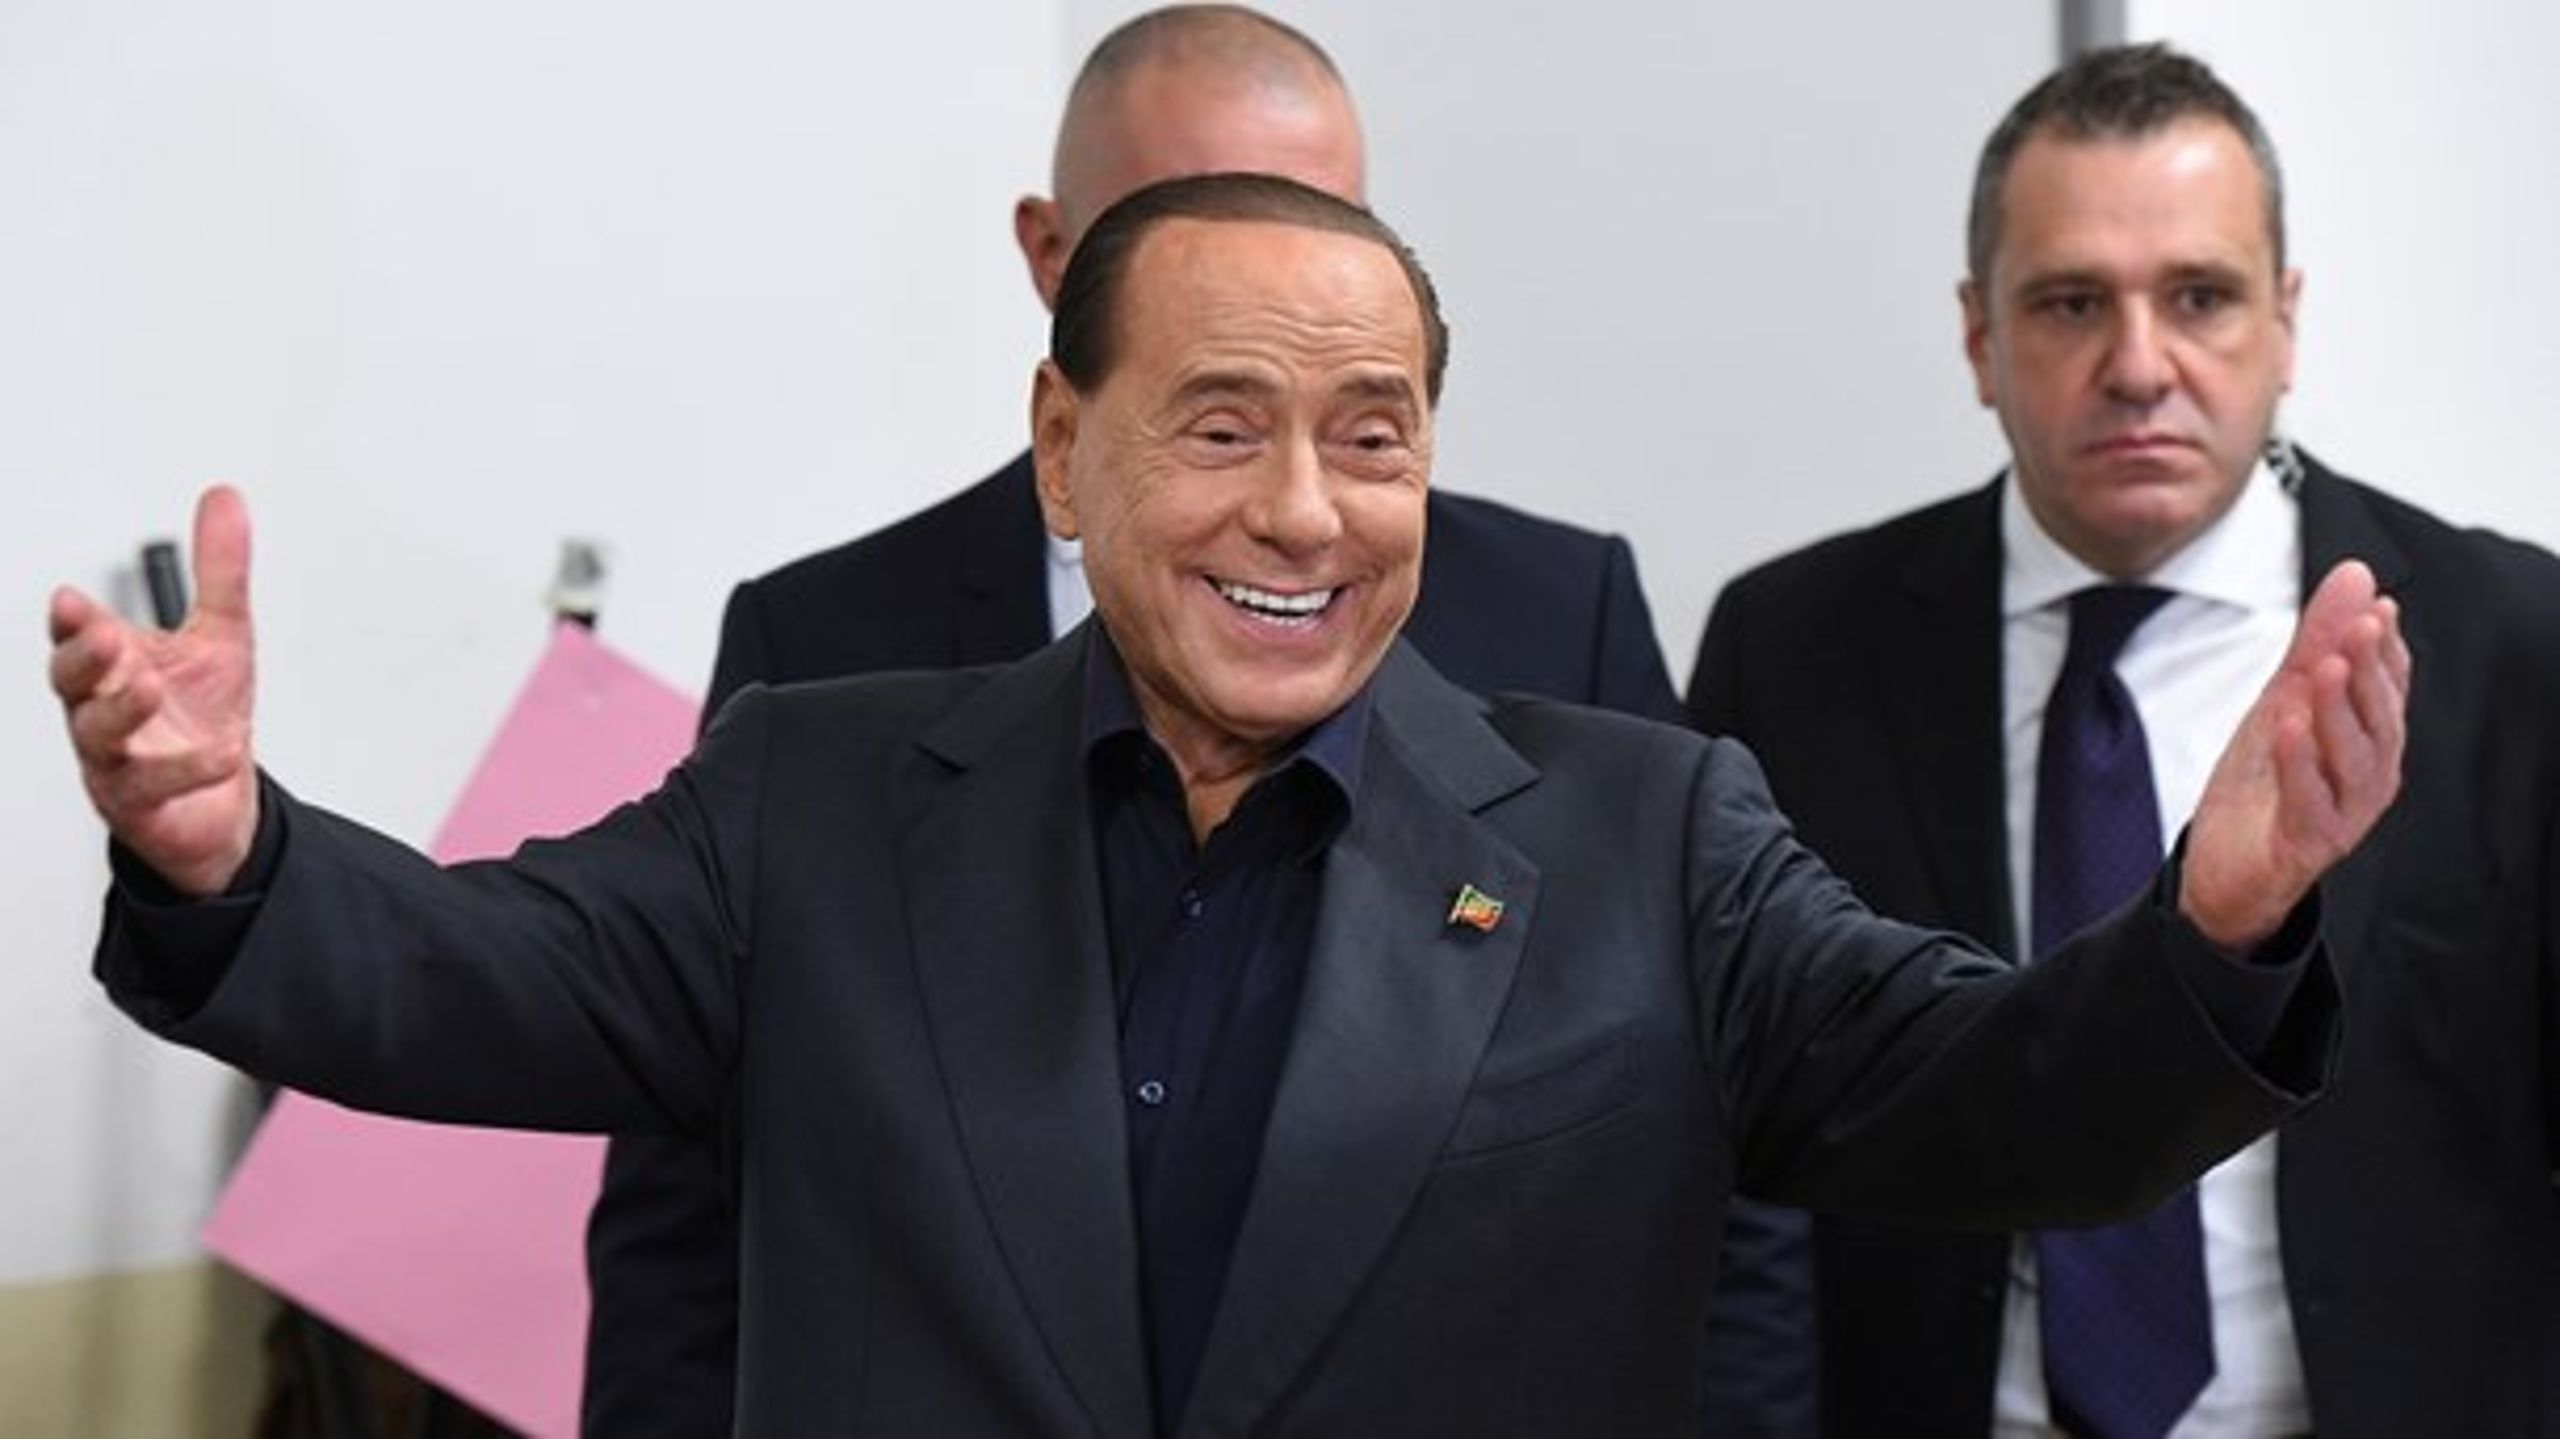 Silvio Berlusconis Forza Italia-parti fik otte procent af&nbsp;stemmerne i Italien.&nbsp;